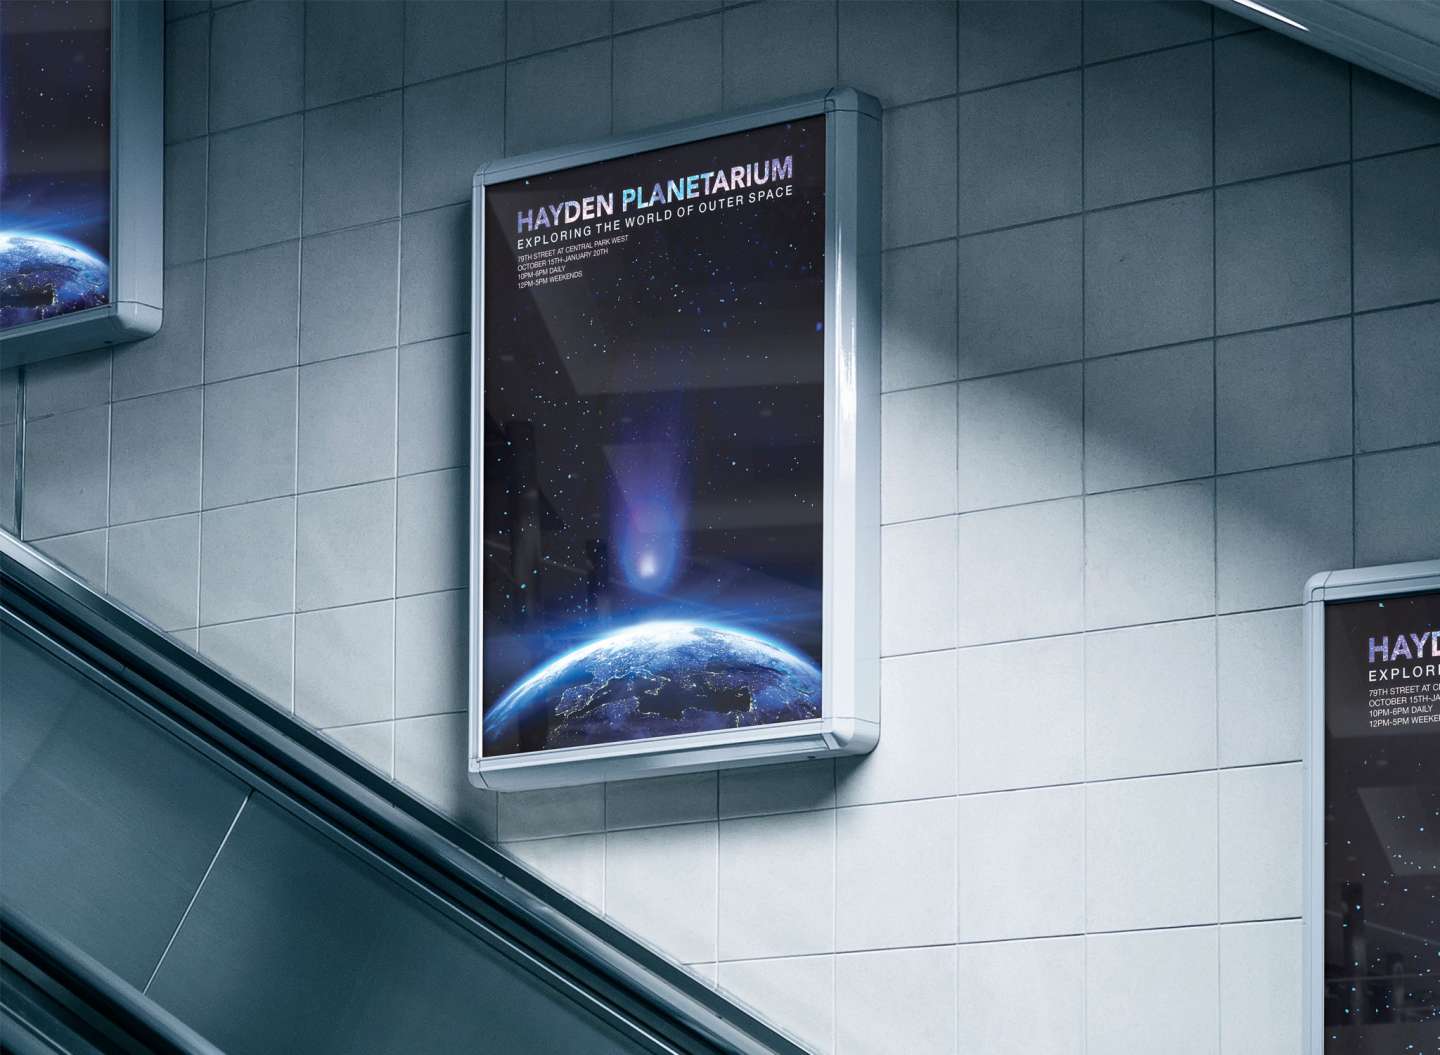 Hayden Planetarium Poster